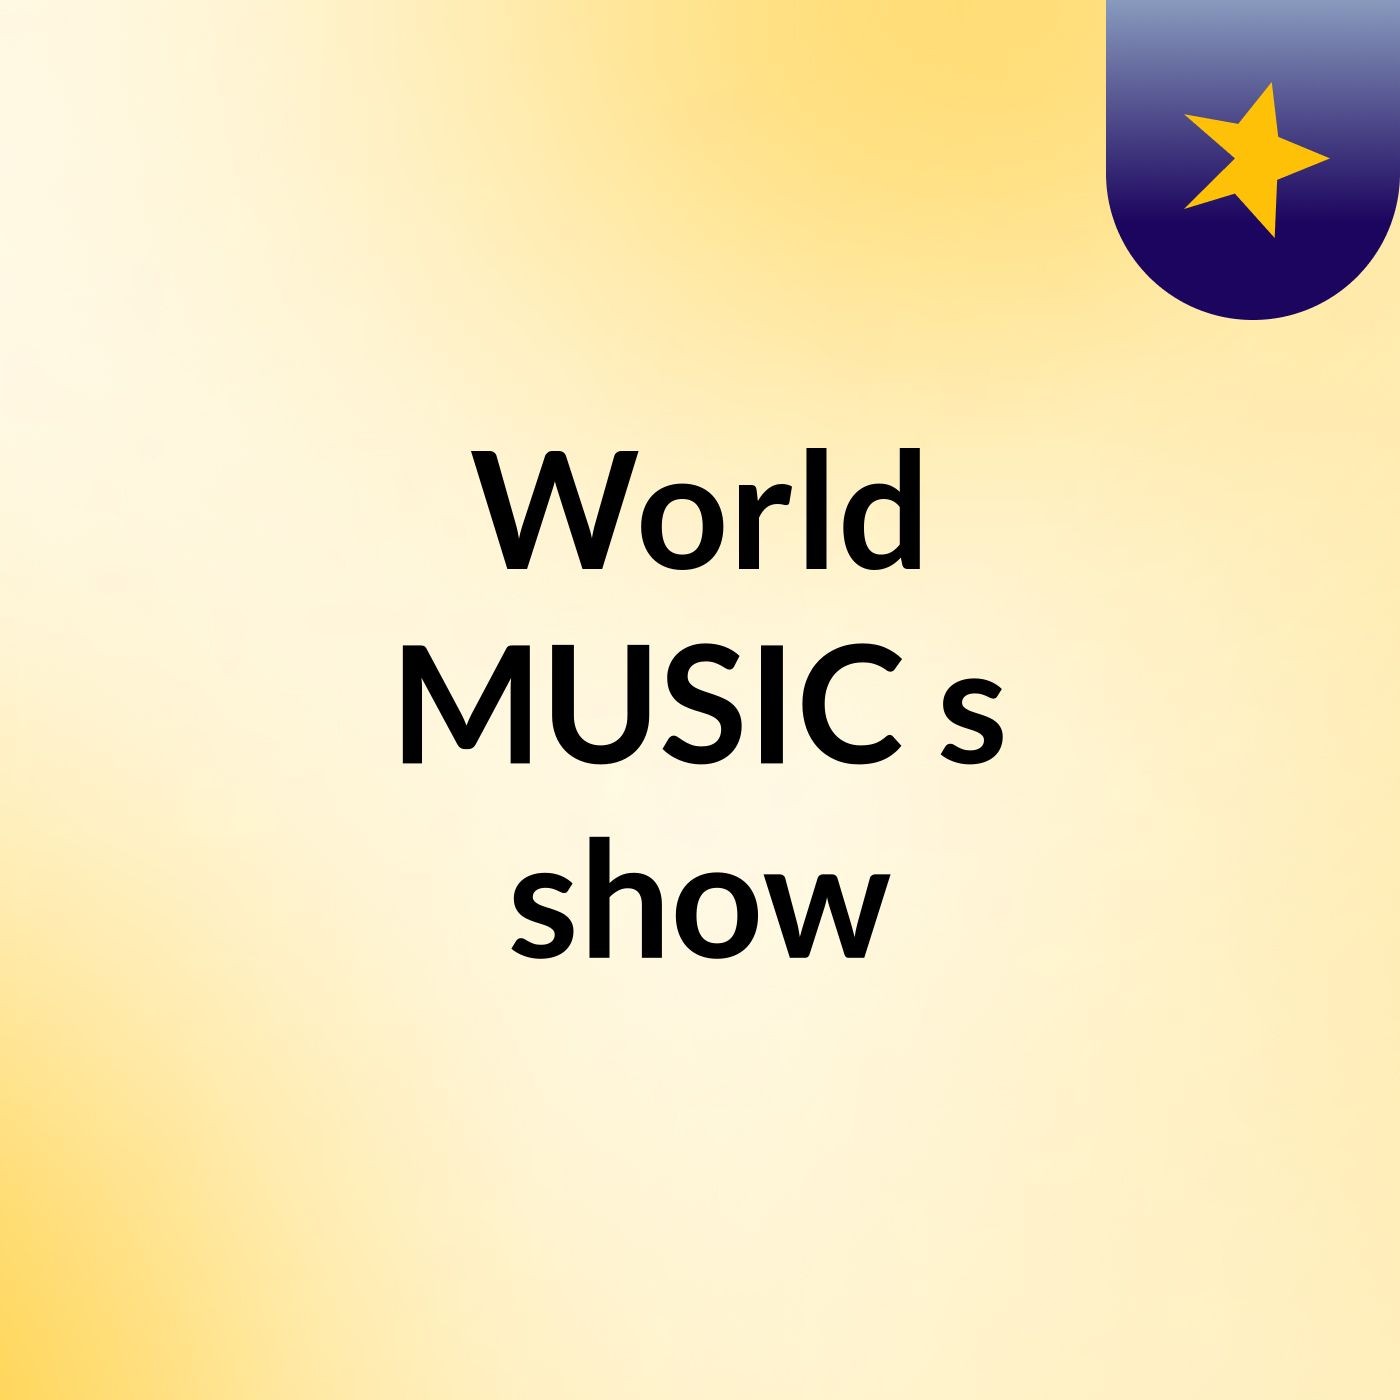 World MUSIC's show